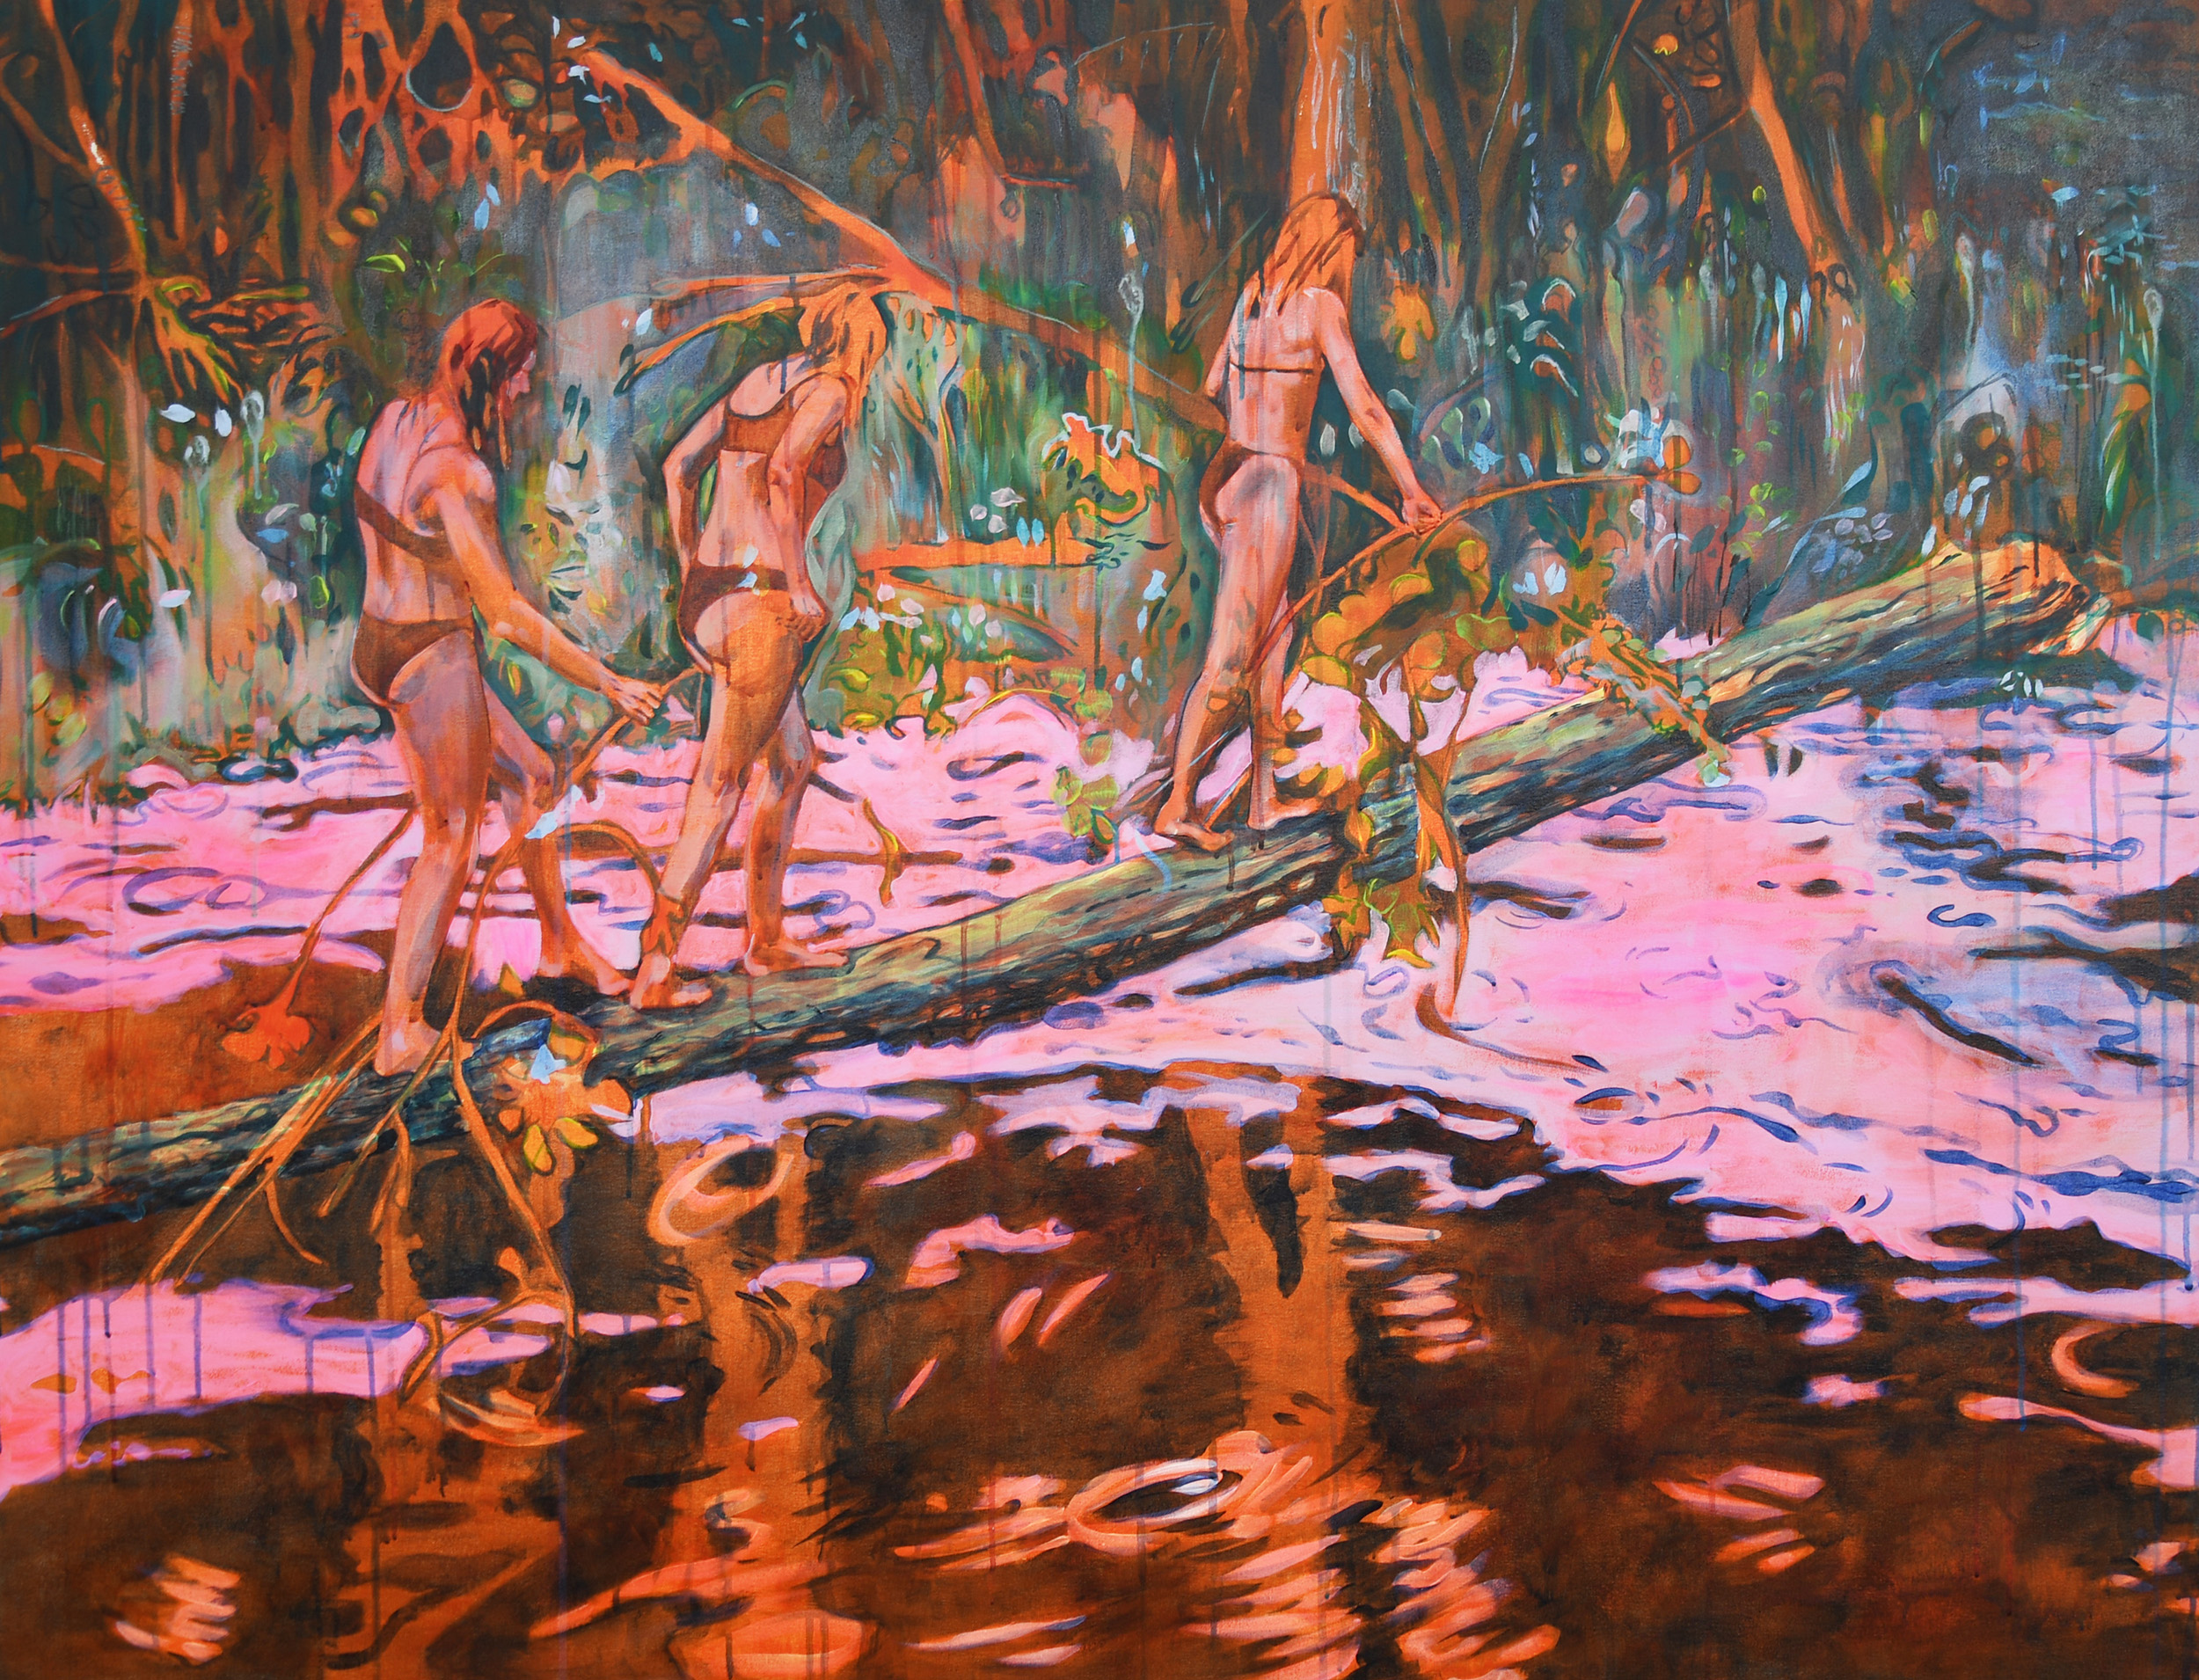 'There Were Three', Daniel Freaker, Acrylic on canvas, 100 x 130 cm